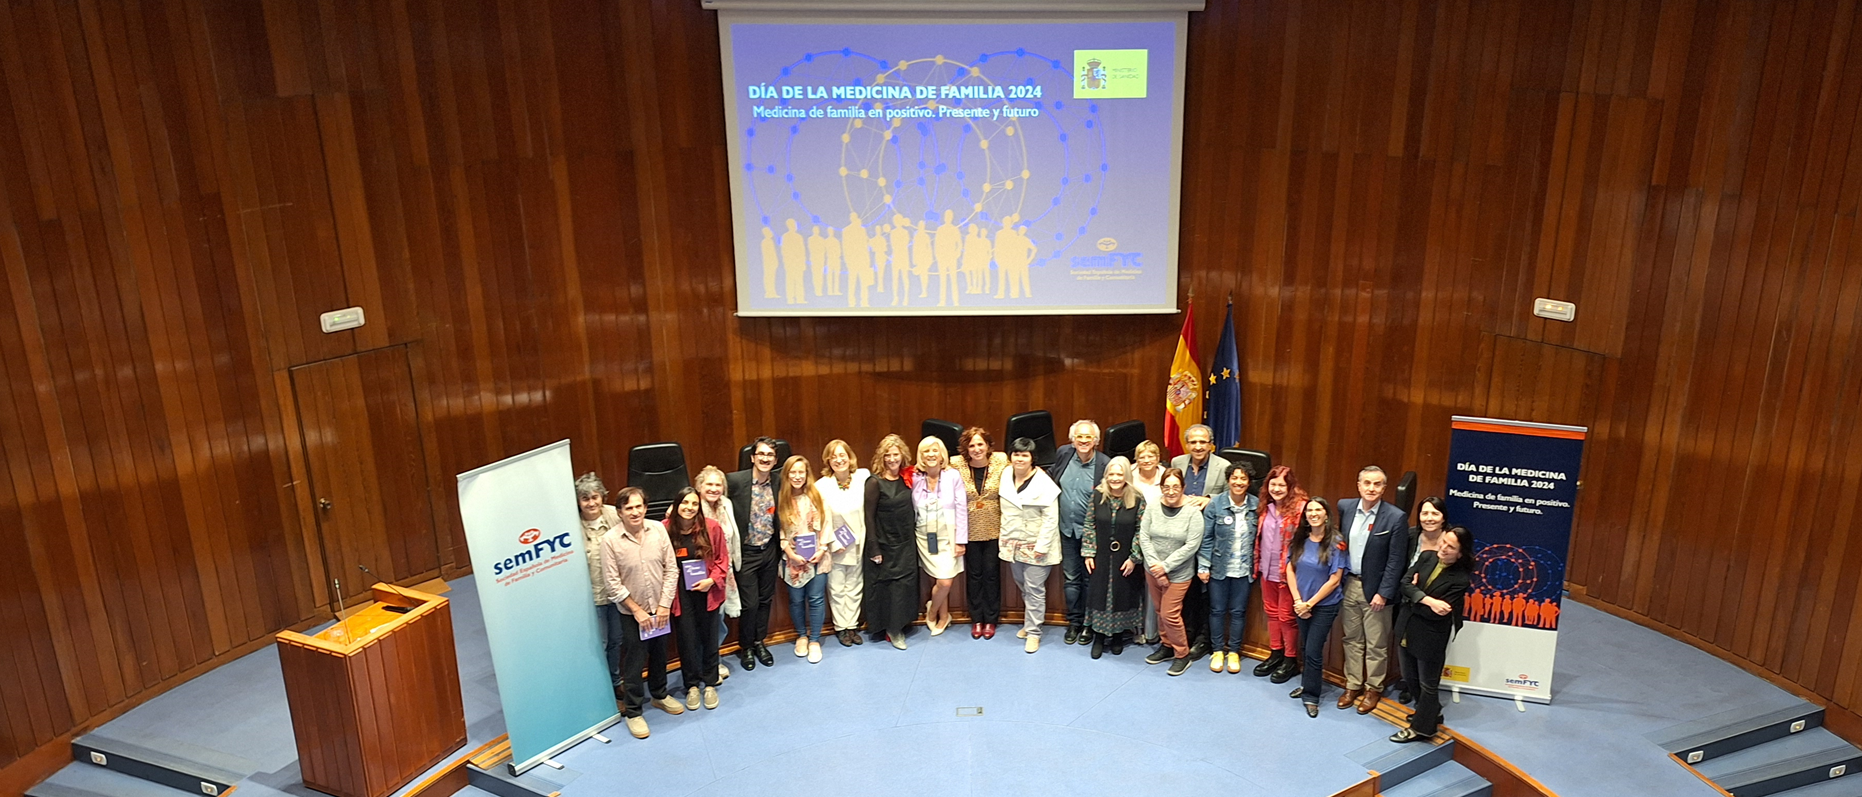 La semFYC reivindica el papel fundamental de la medicina de familia en España